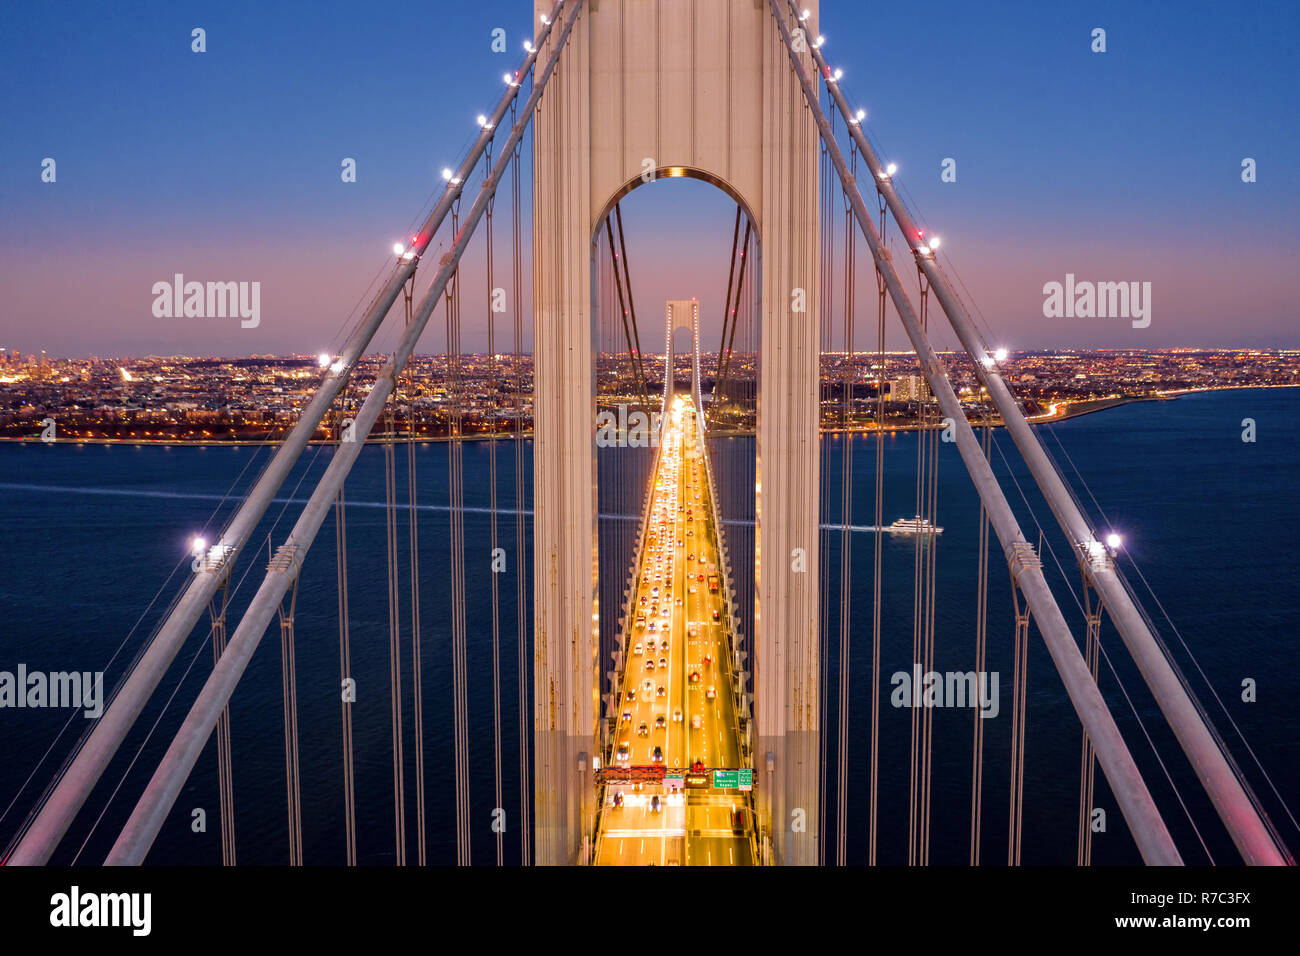 Luftaufnahme von verrazzano Narrows Bridge Stockfoto